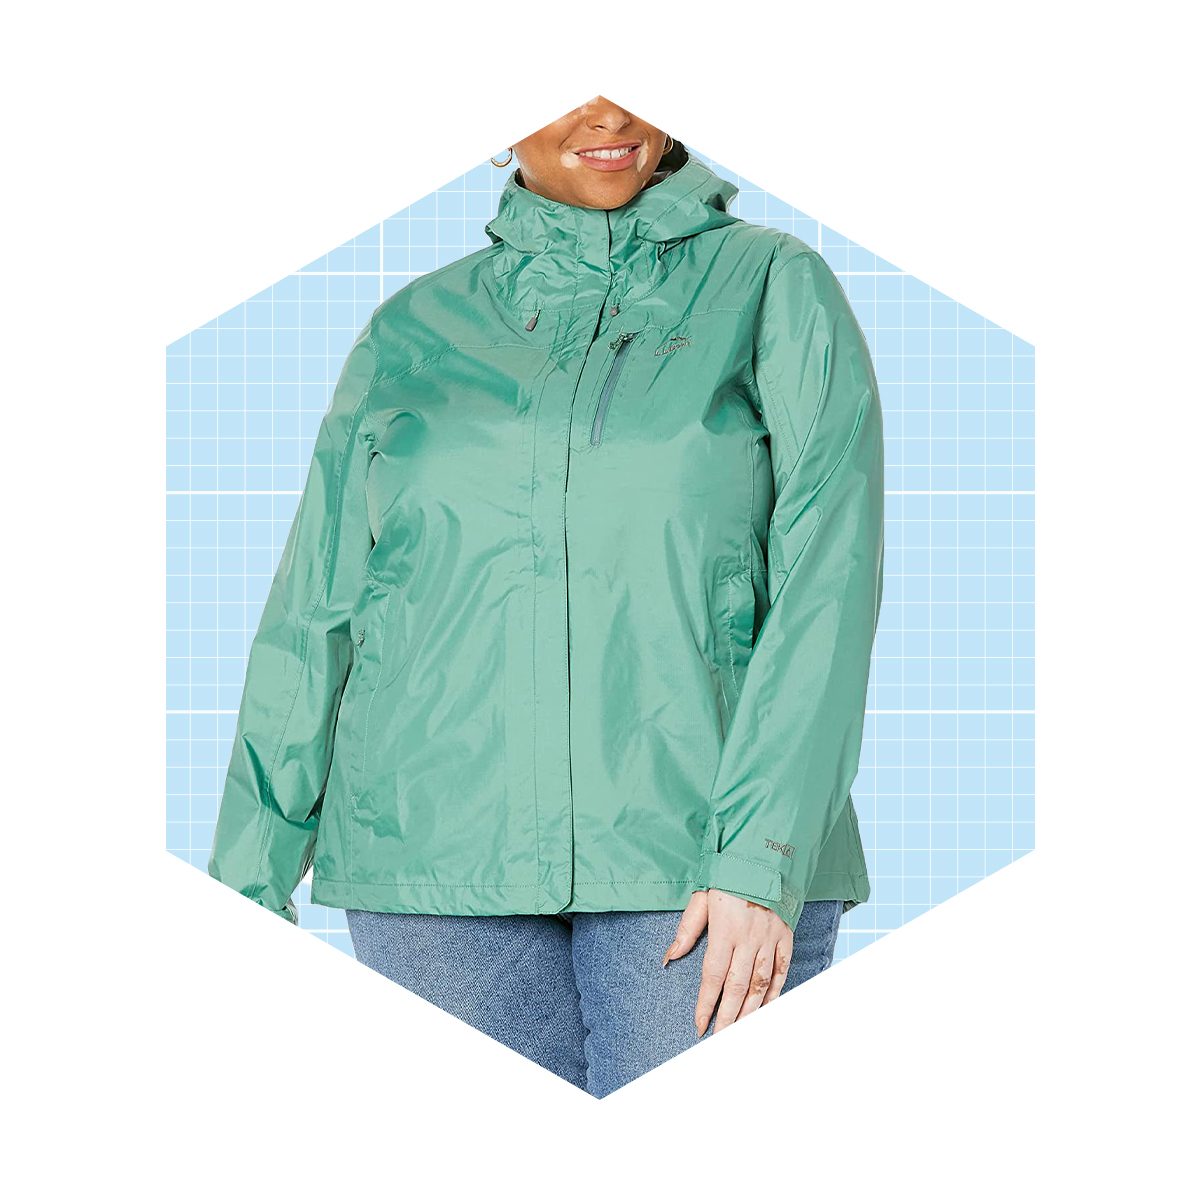 L.L.Bean Plus Size Trail Model Rain Jacket, Clover